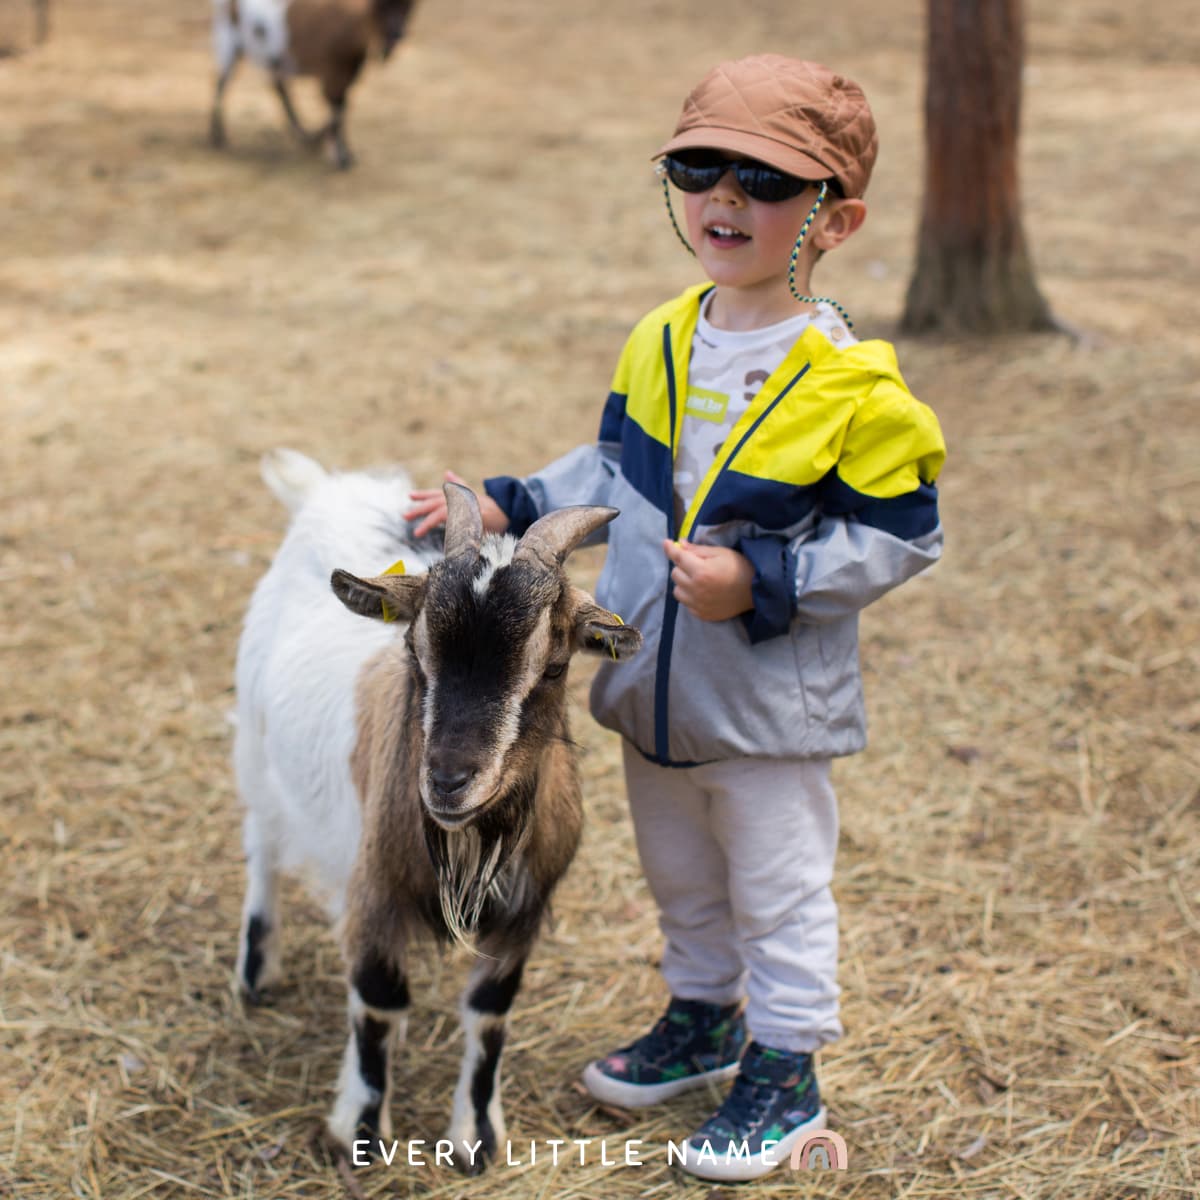 Boy petting goat.